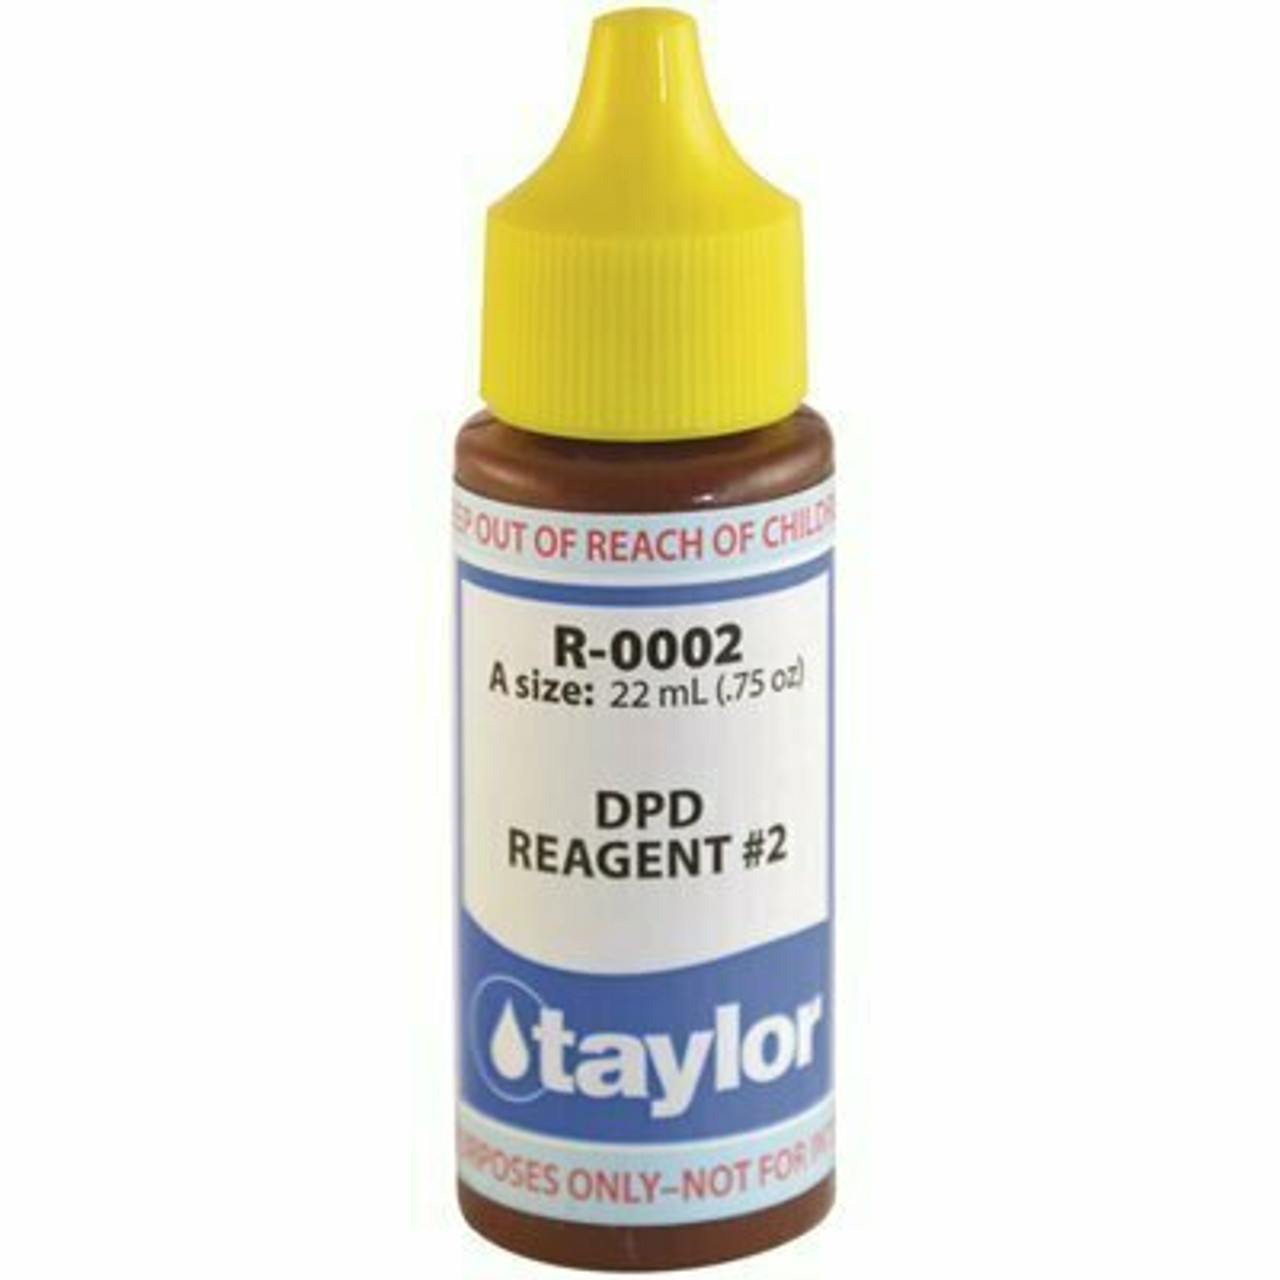 Taylor 0.75 Oz. Bottle Test Kit Replacement Reagent Refill Bottles Dpd Reagent #2